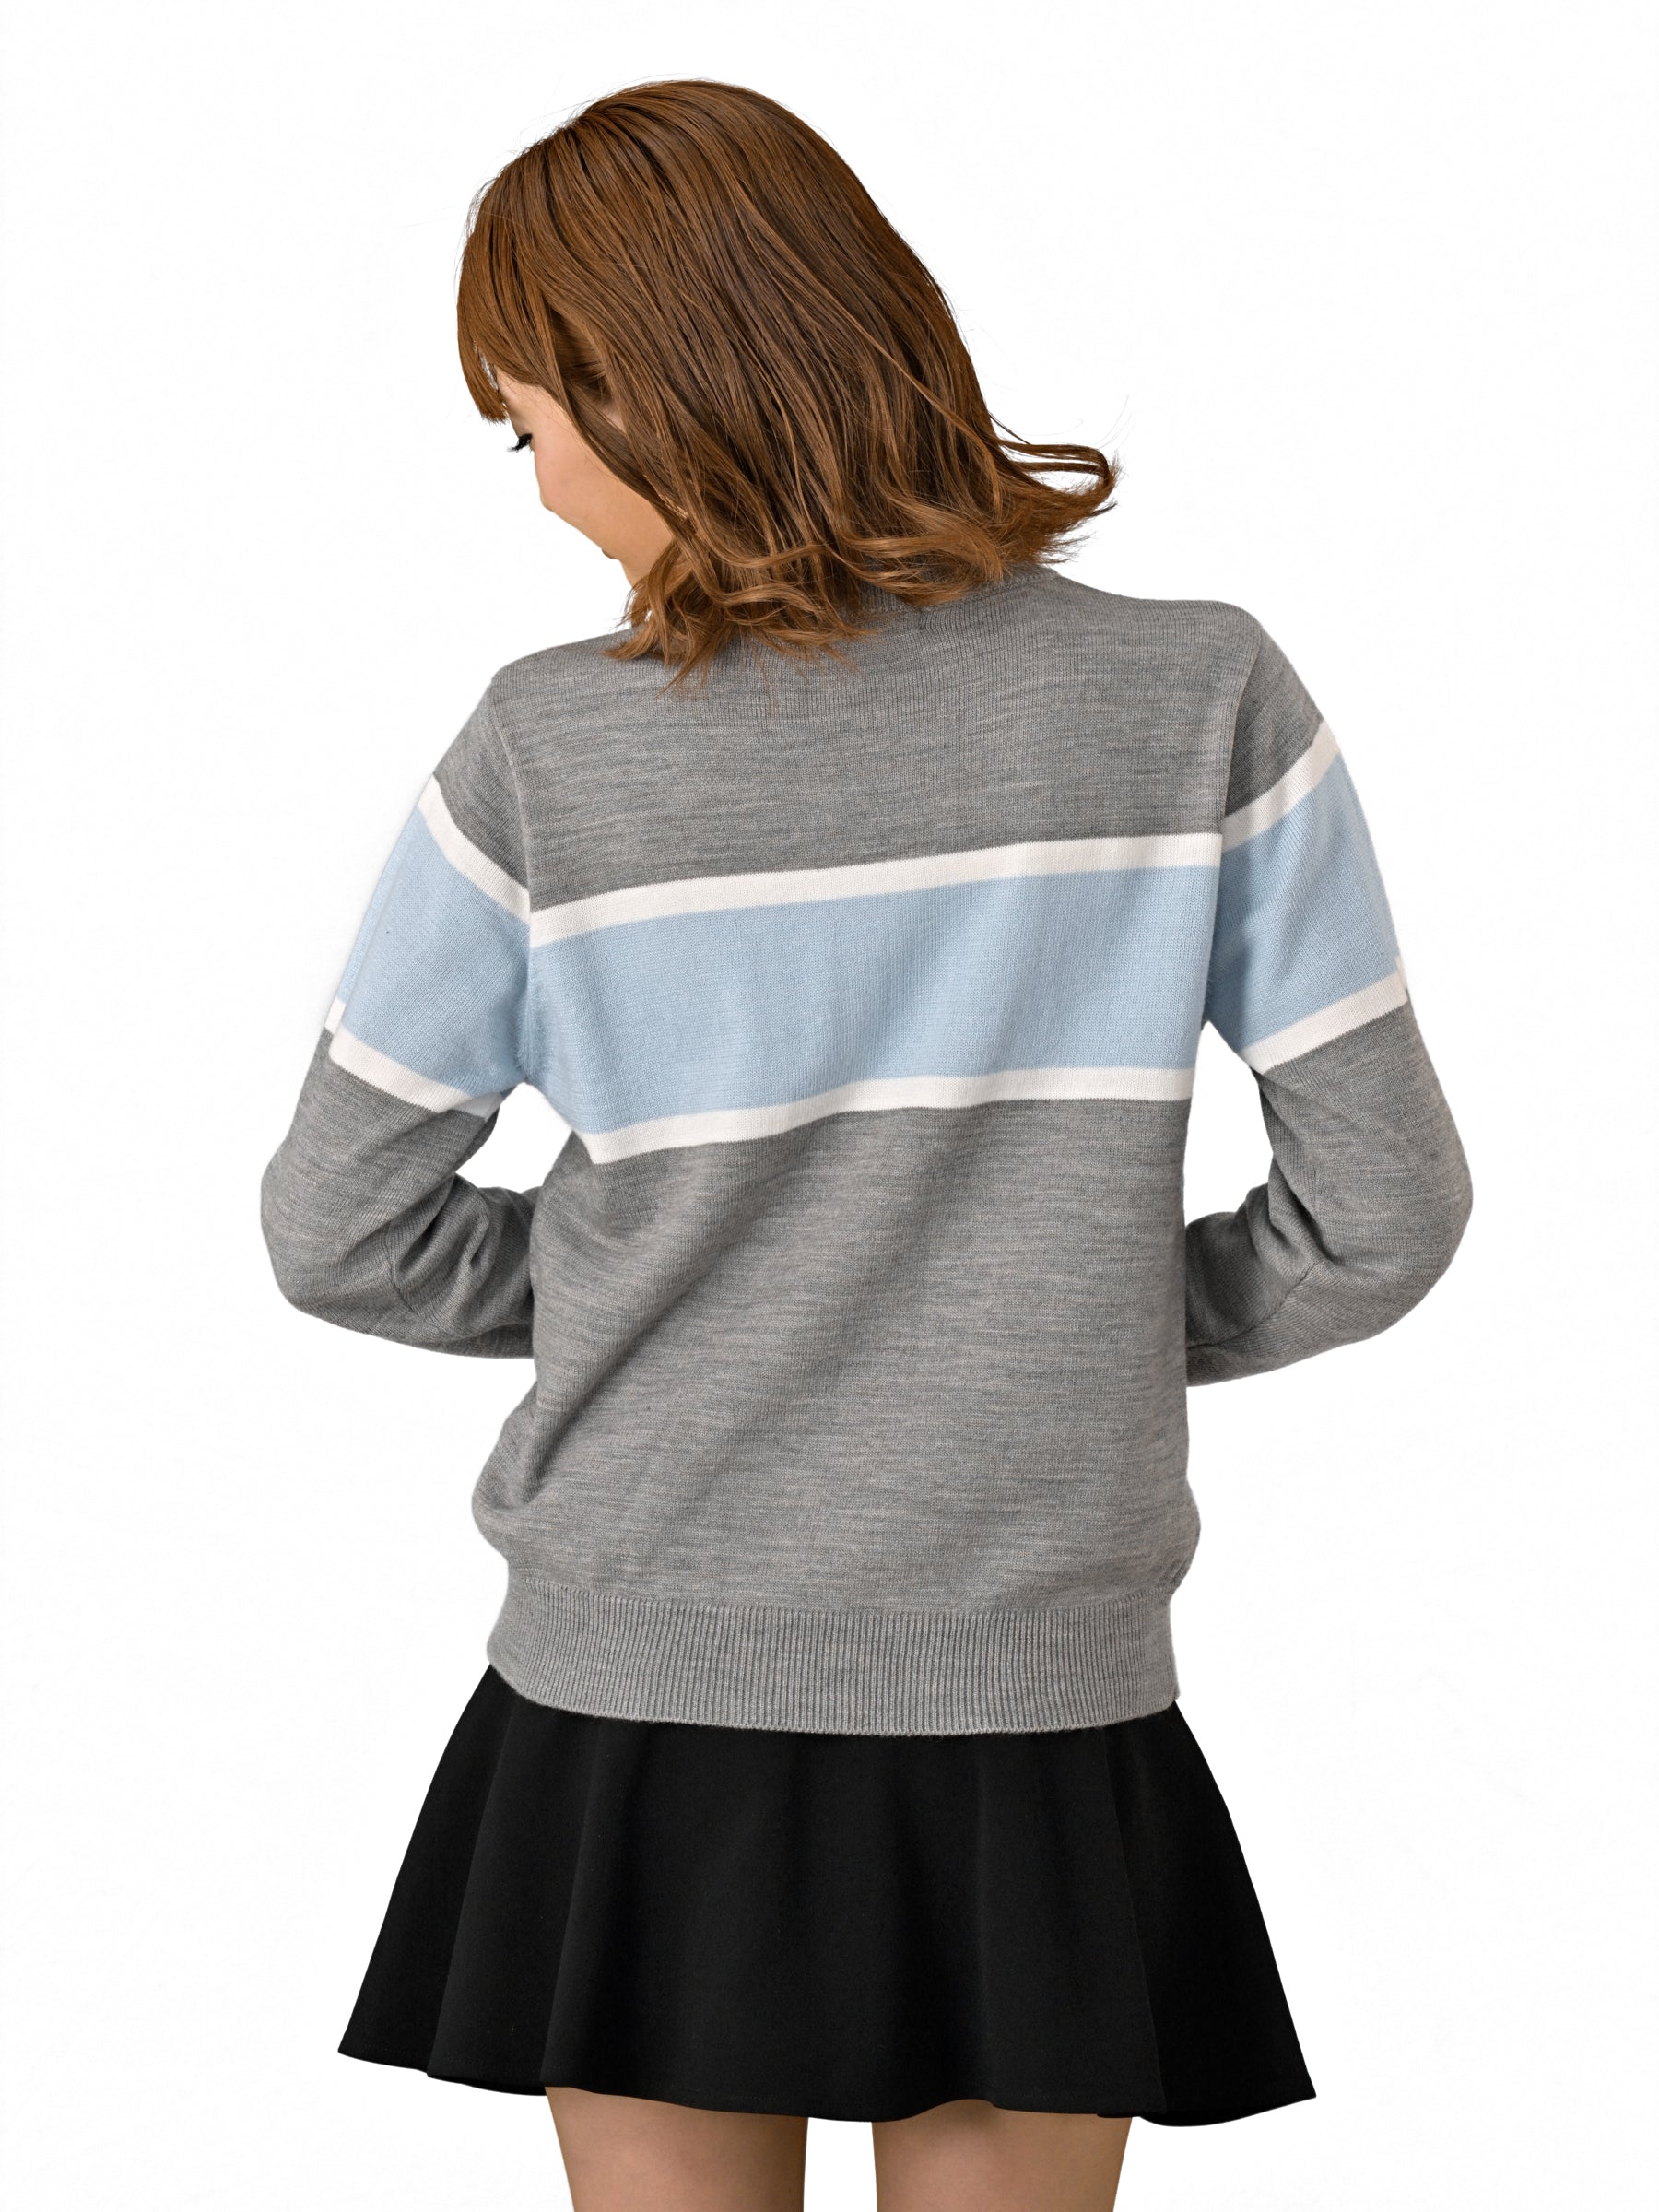 High tension stretch semi-flared skirt (701J8500)